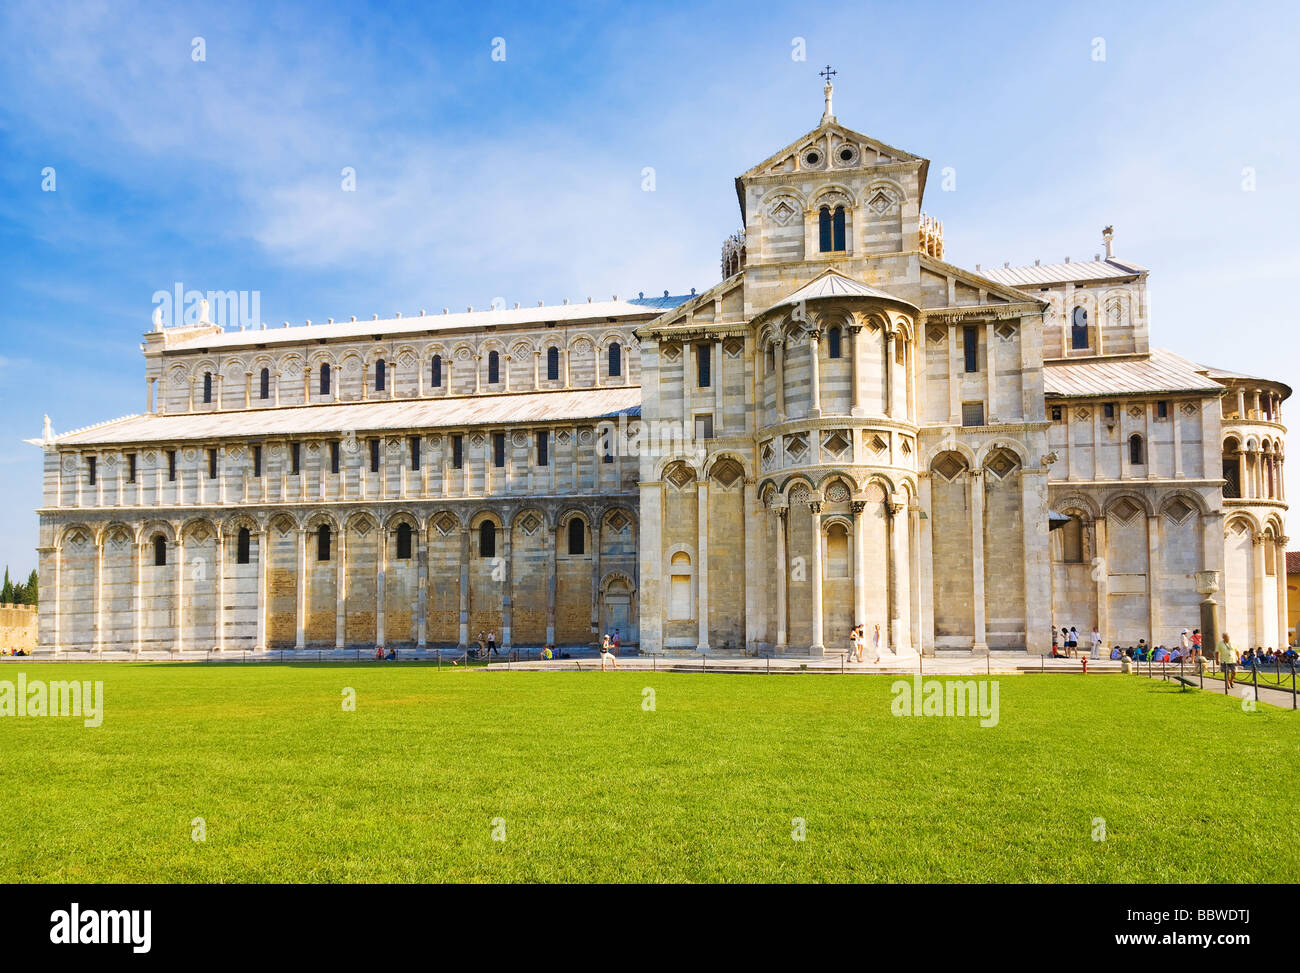 Kathedrale in der Nähe von berühmten Schiefen Turm in Pisa Italien Stockfoto